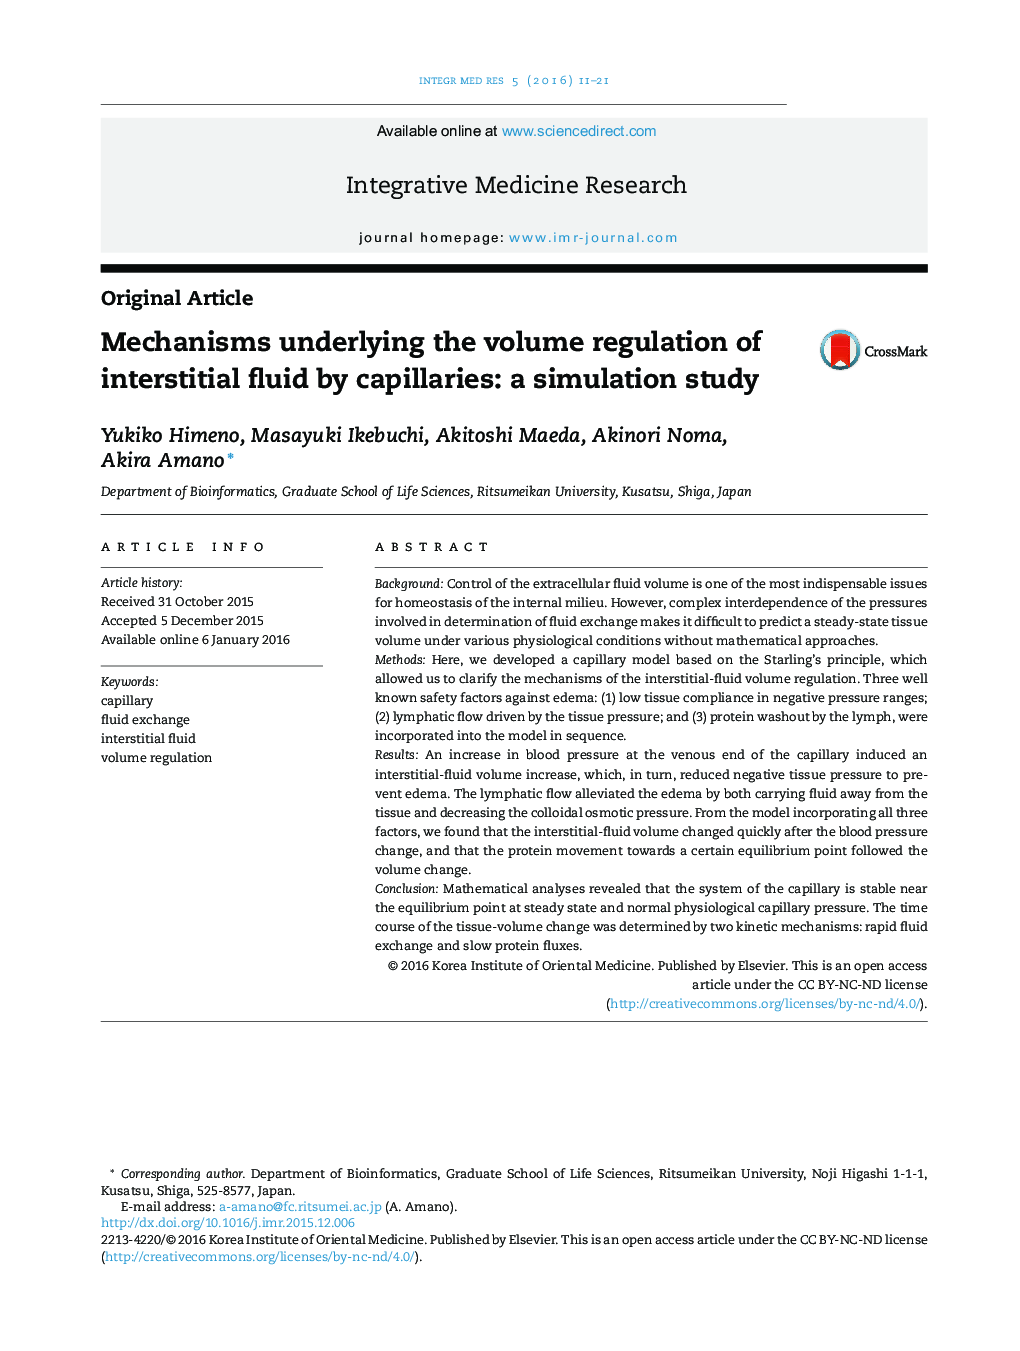 Mechanisms underlying the volume regulation of interstitial fluid by capillaries: a simulation study